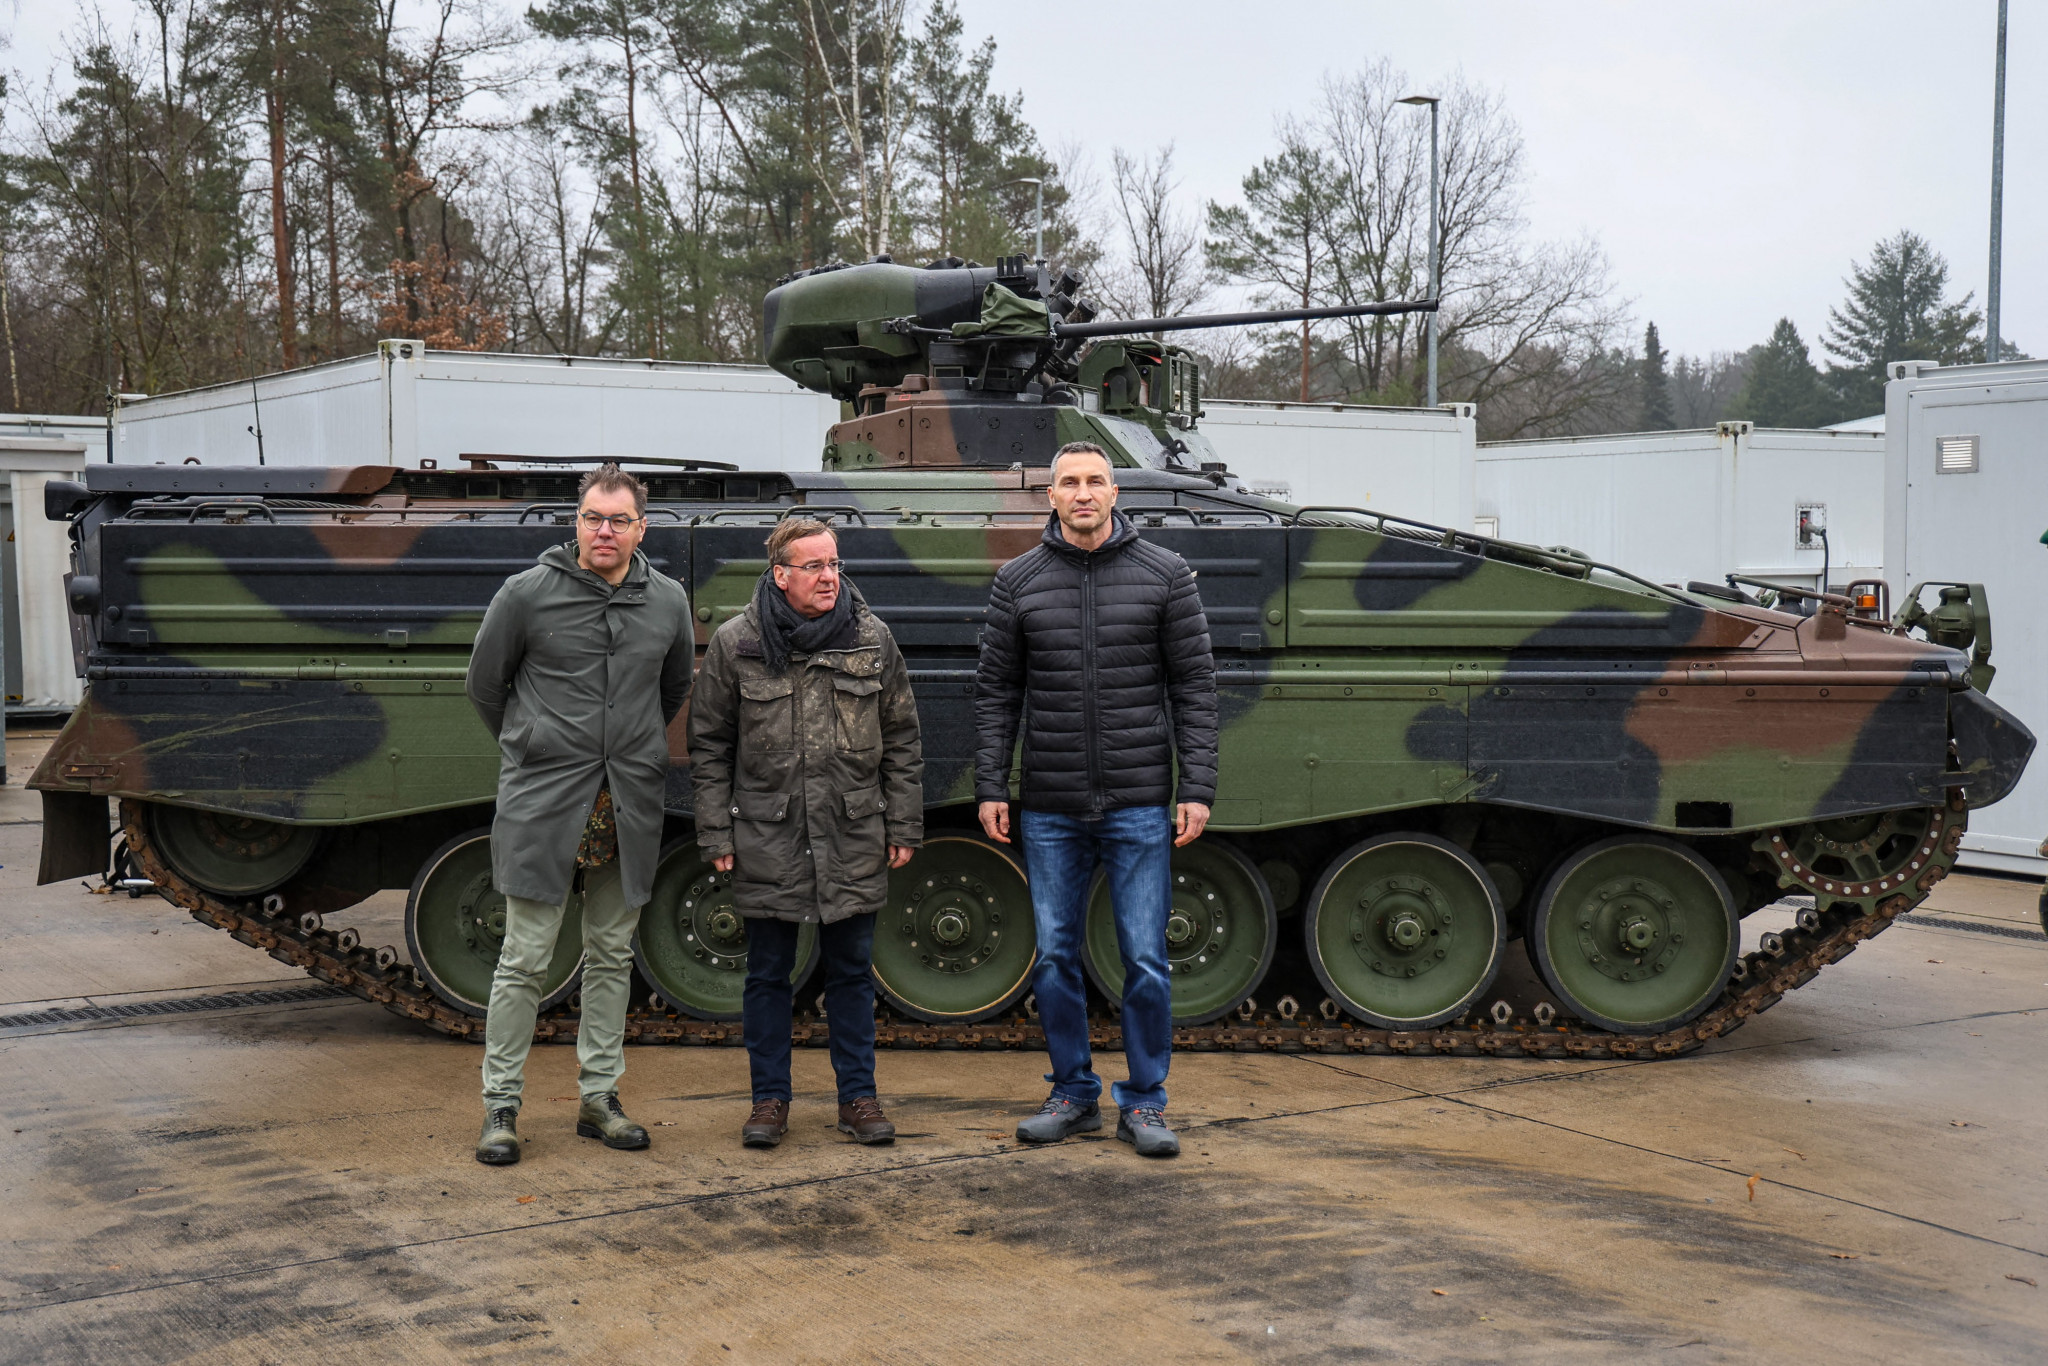 Olympic champion Klitschko drives tank in German training ground for Ukraine war